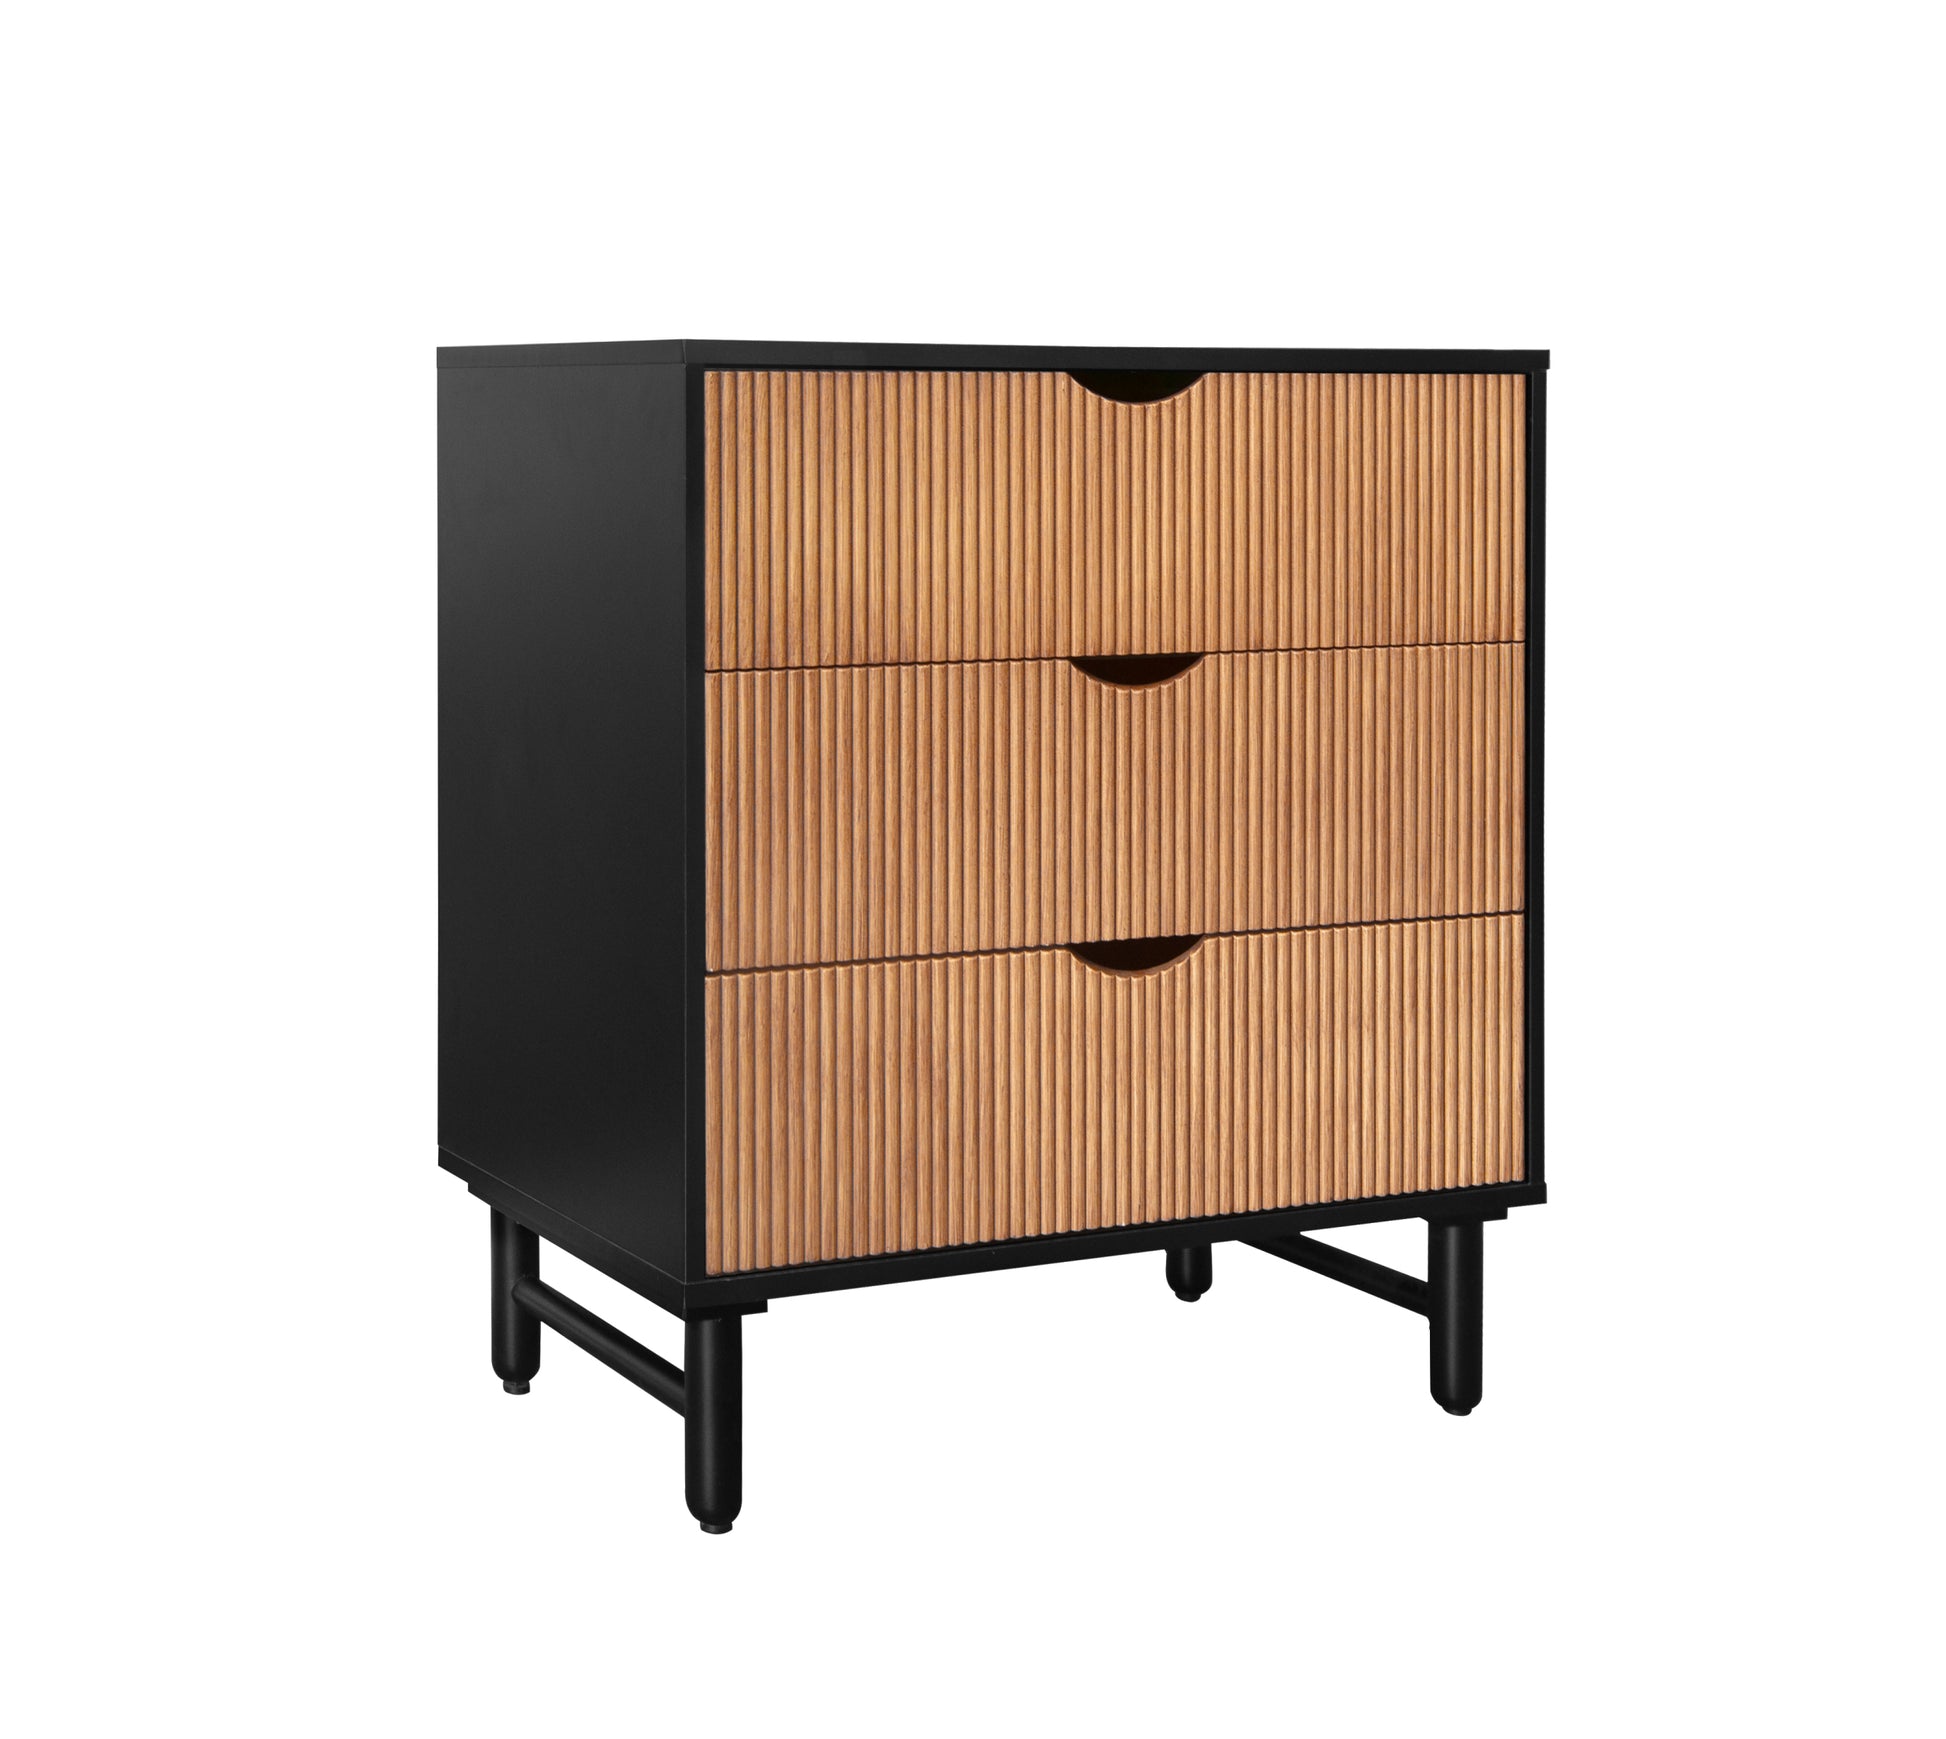 3 Drawer Cabinet, Suitable For Bedroom, Living